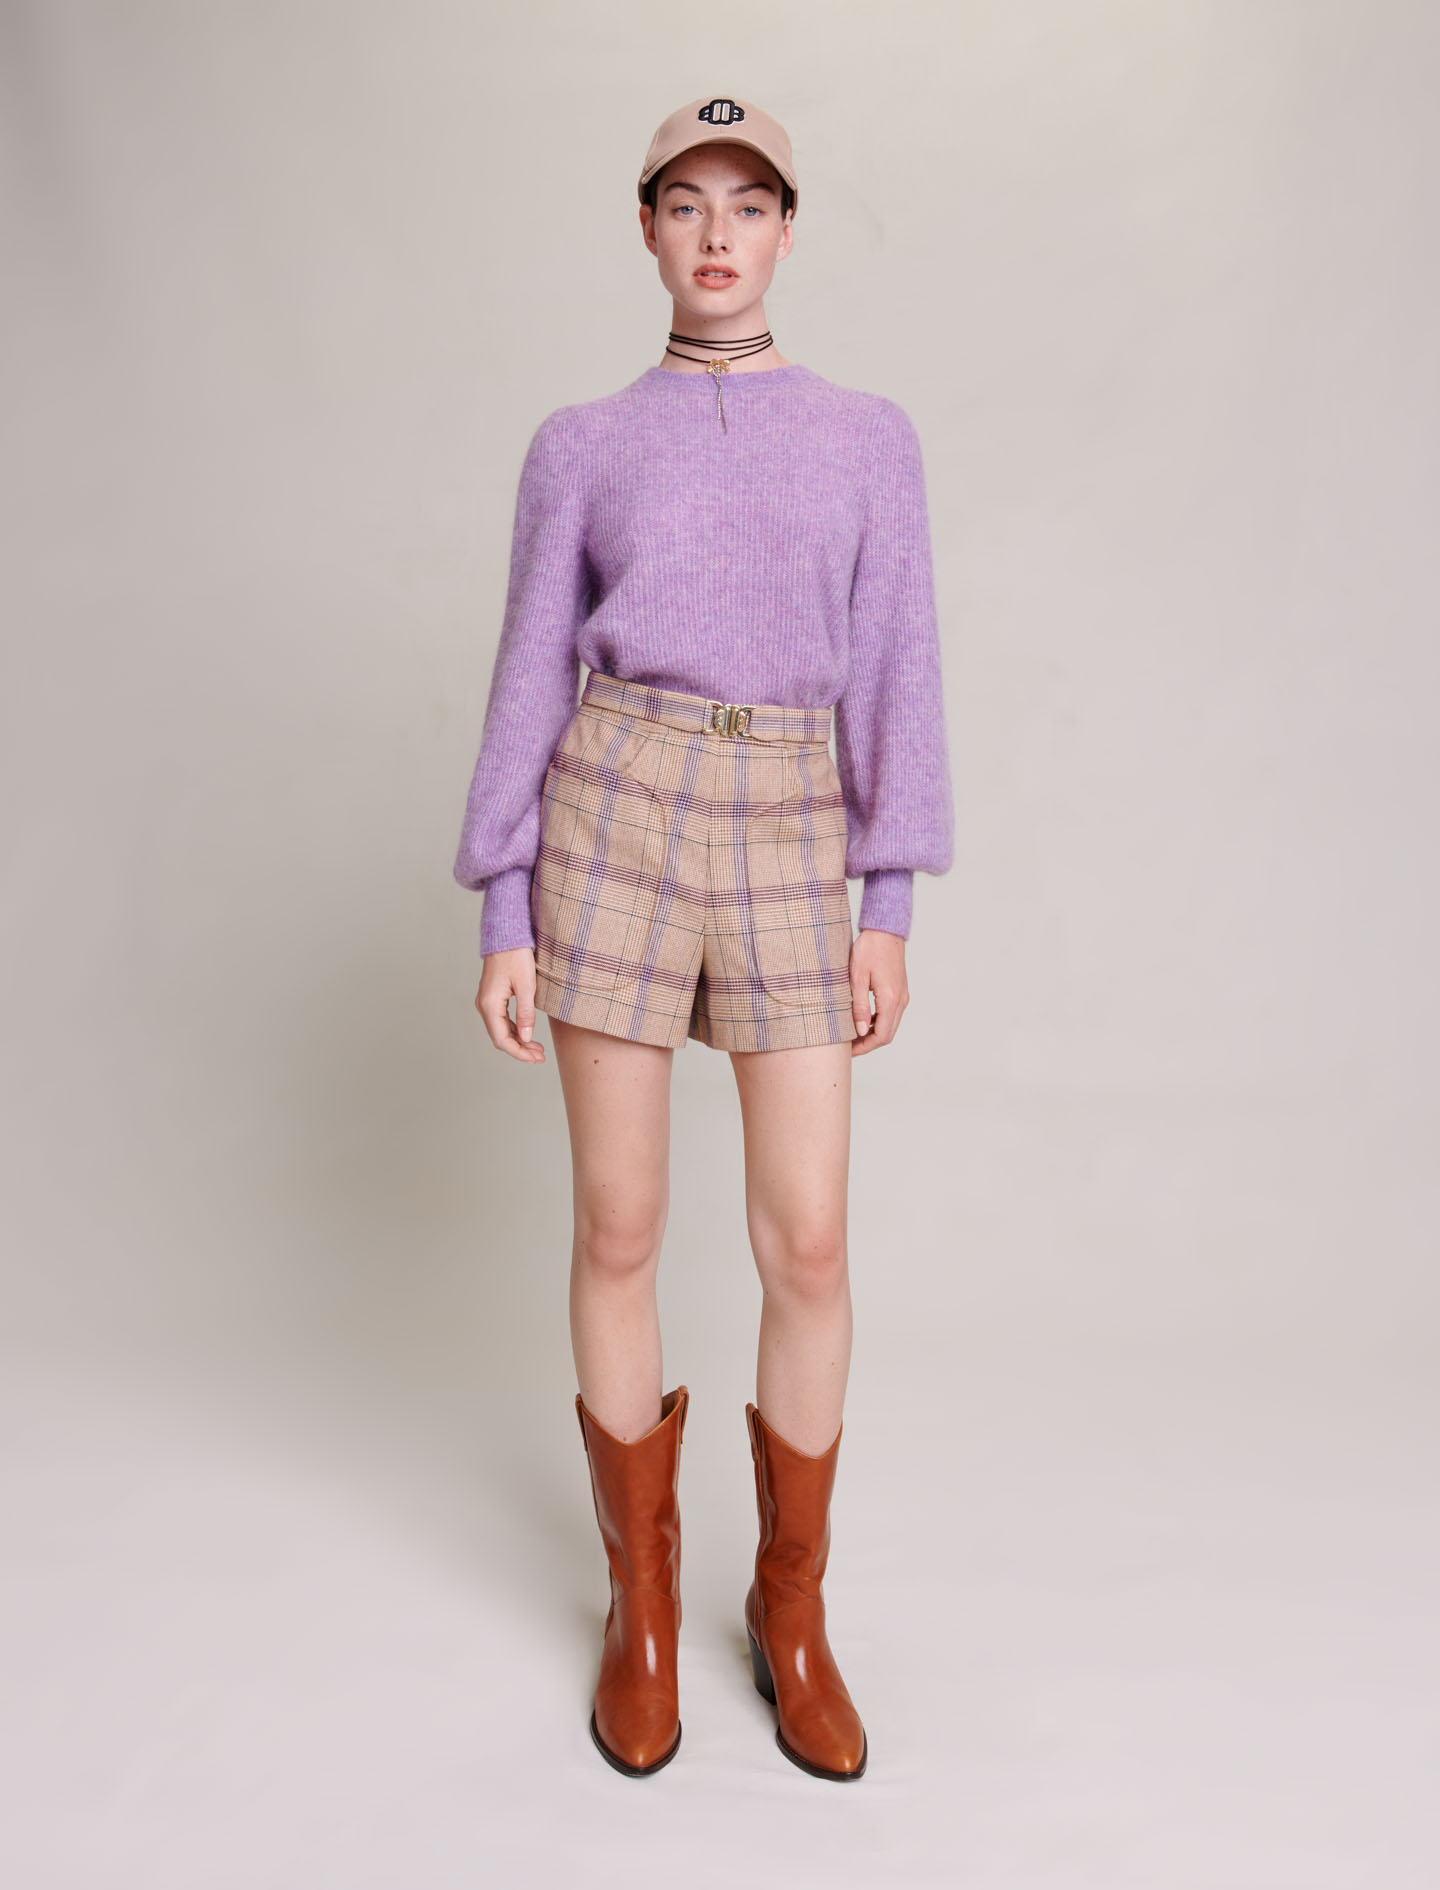 Maje Woman's polyamide, Knit jumper for Fall/Winter, in color Purple / Purple